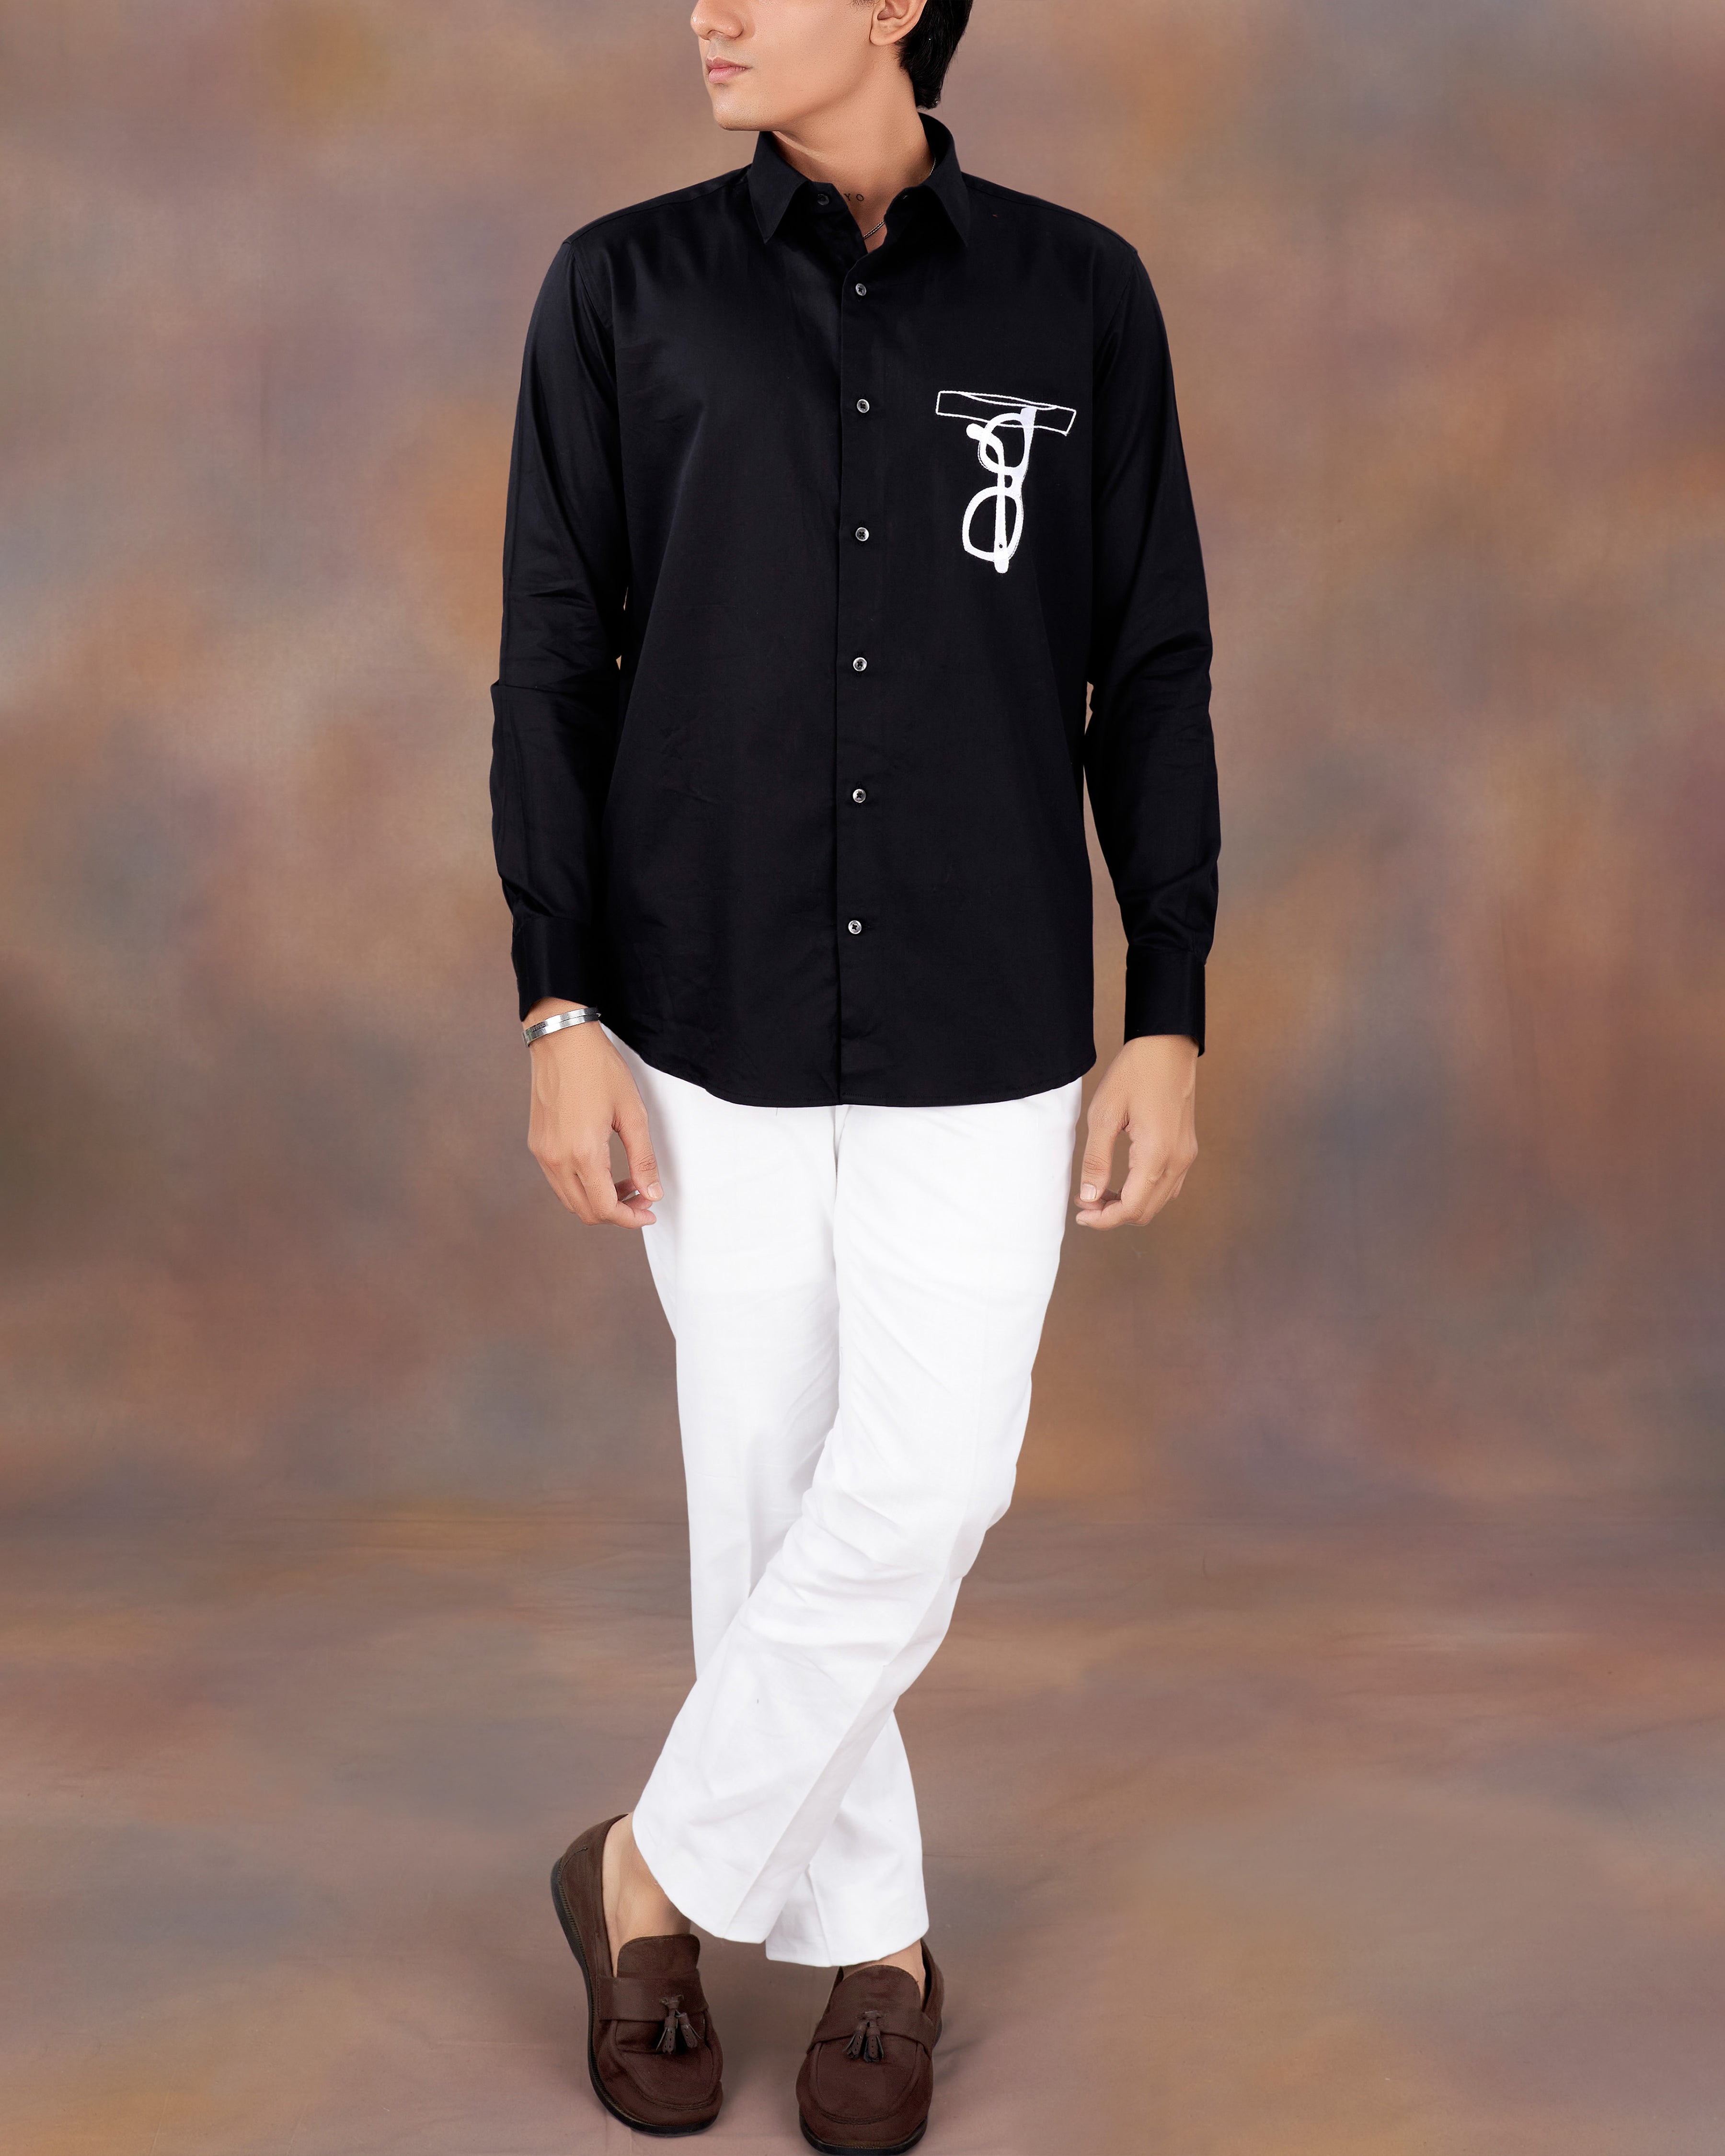 Jade Black with Spectacles Embroidered Super Soft Premium Cotton Shirt 1312-BLK-E019-38, 1312-BLK-E019-H-38, 1312-BLK-E019-39, 1312-BLK-E019-H-39, 1312-BLK-E019-40, 1312-BLK-E019-H-40, 1312-BLK-E019-42, 1312-BLK-E019-H-42, 1312-BLK-E019-44, 1312-BLK-E019-H-44, 1312-BLK-E019-46, 1312-BLK-E019-H-46, 1312-BLK-E019-48, 1312-BLK-E019-H-48, 1312-BLK-E019-50, 1312-BLK-E019-H-50, 1312-BLK-E019-52, 1312-BLK-E019-H-52